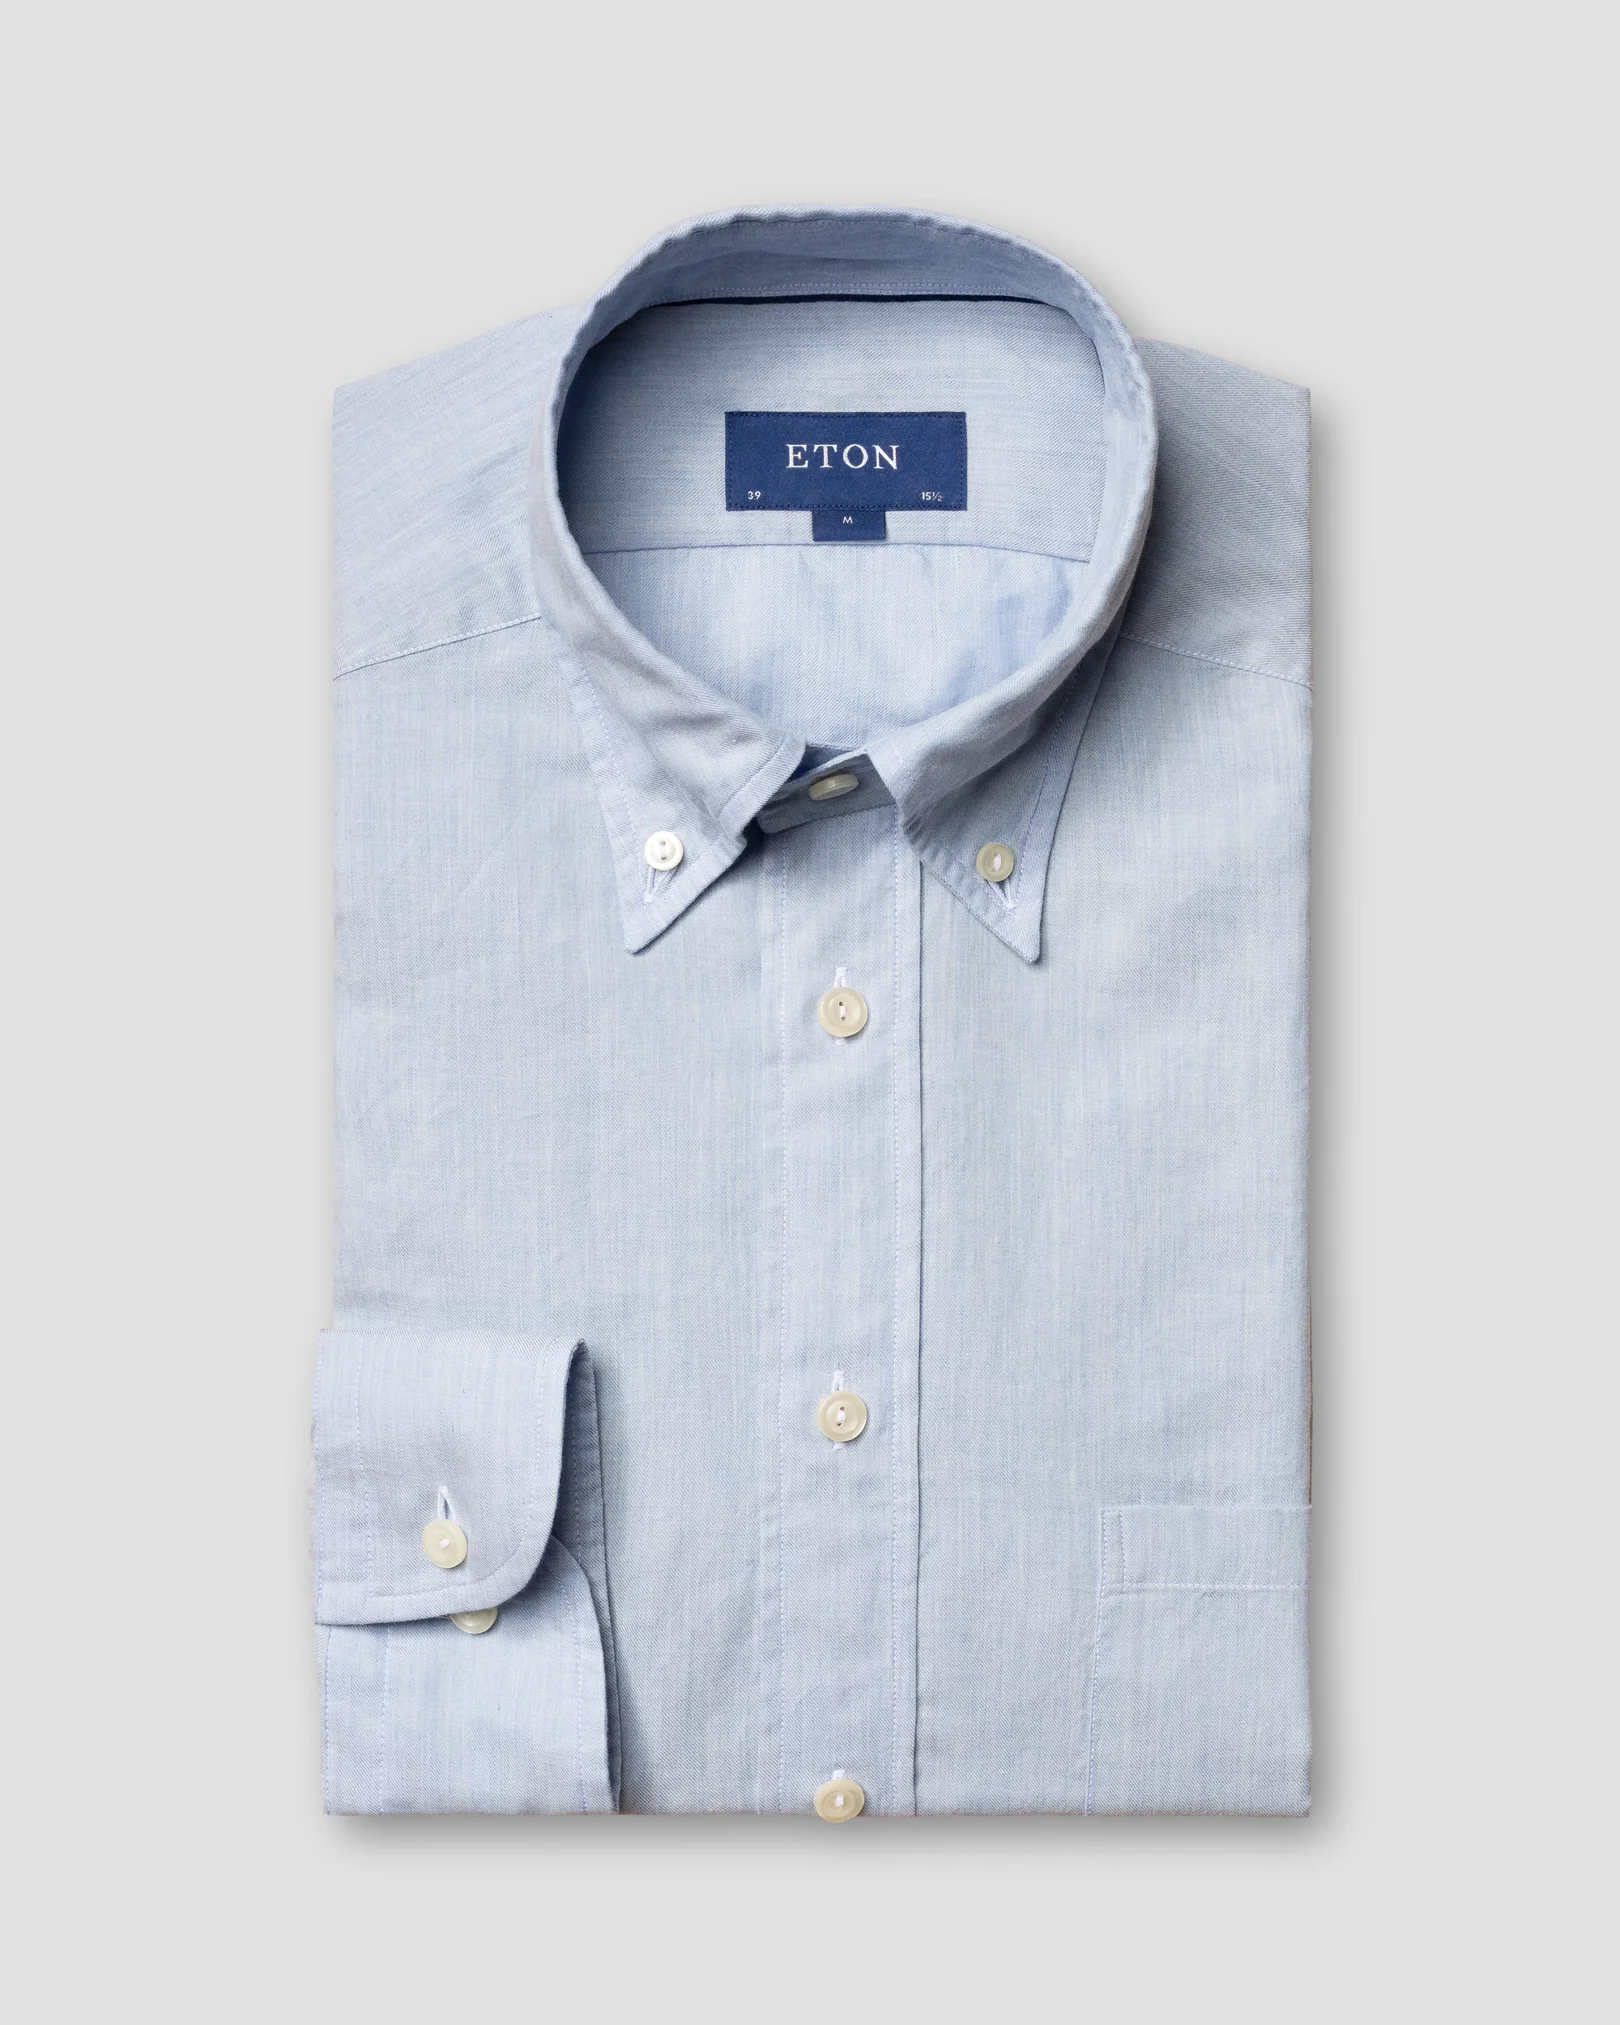 Eton - light blue flannel shirt